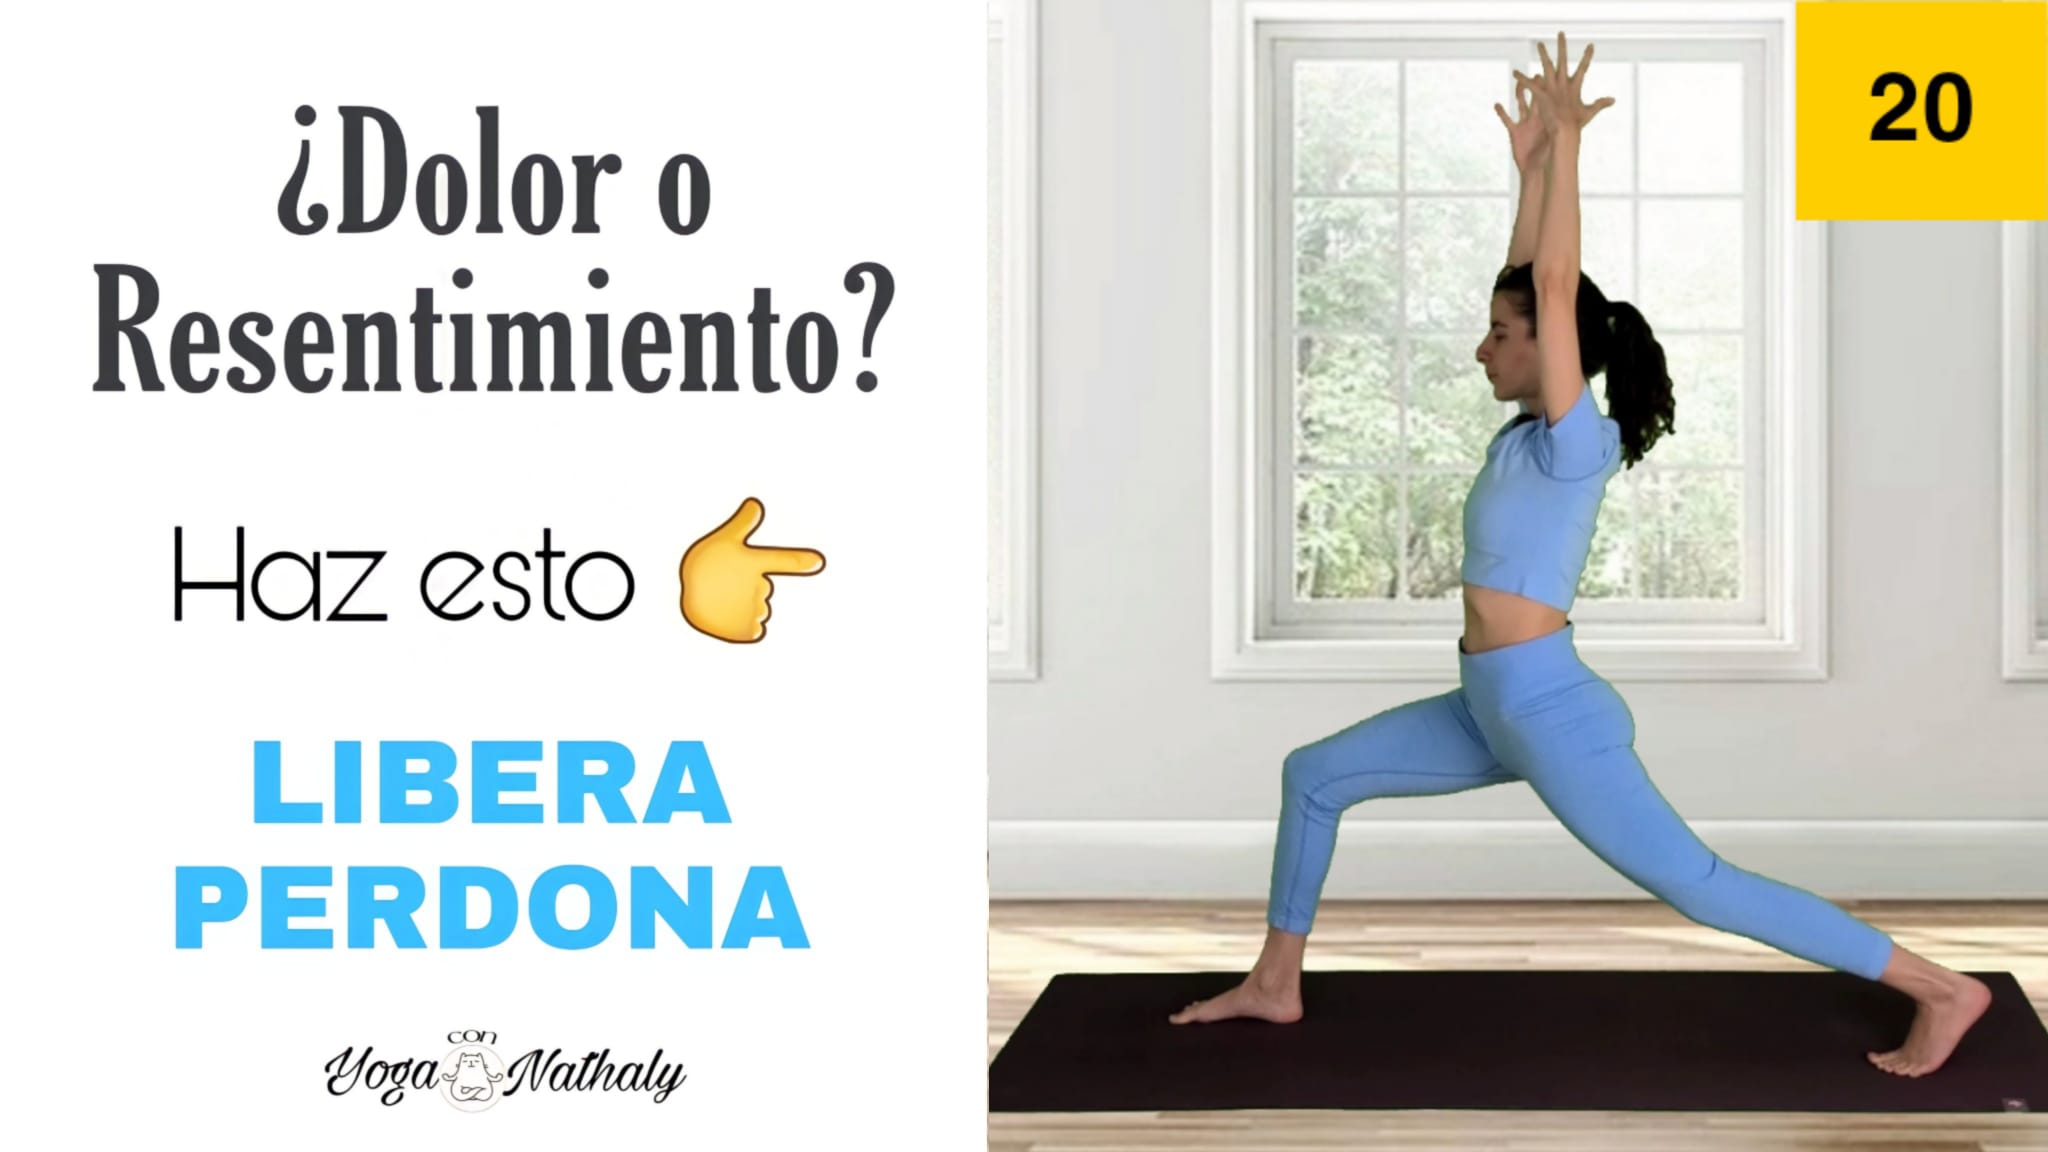 Clase de Yoga terapia en espanol